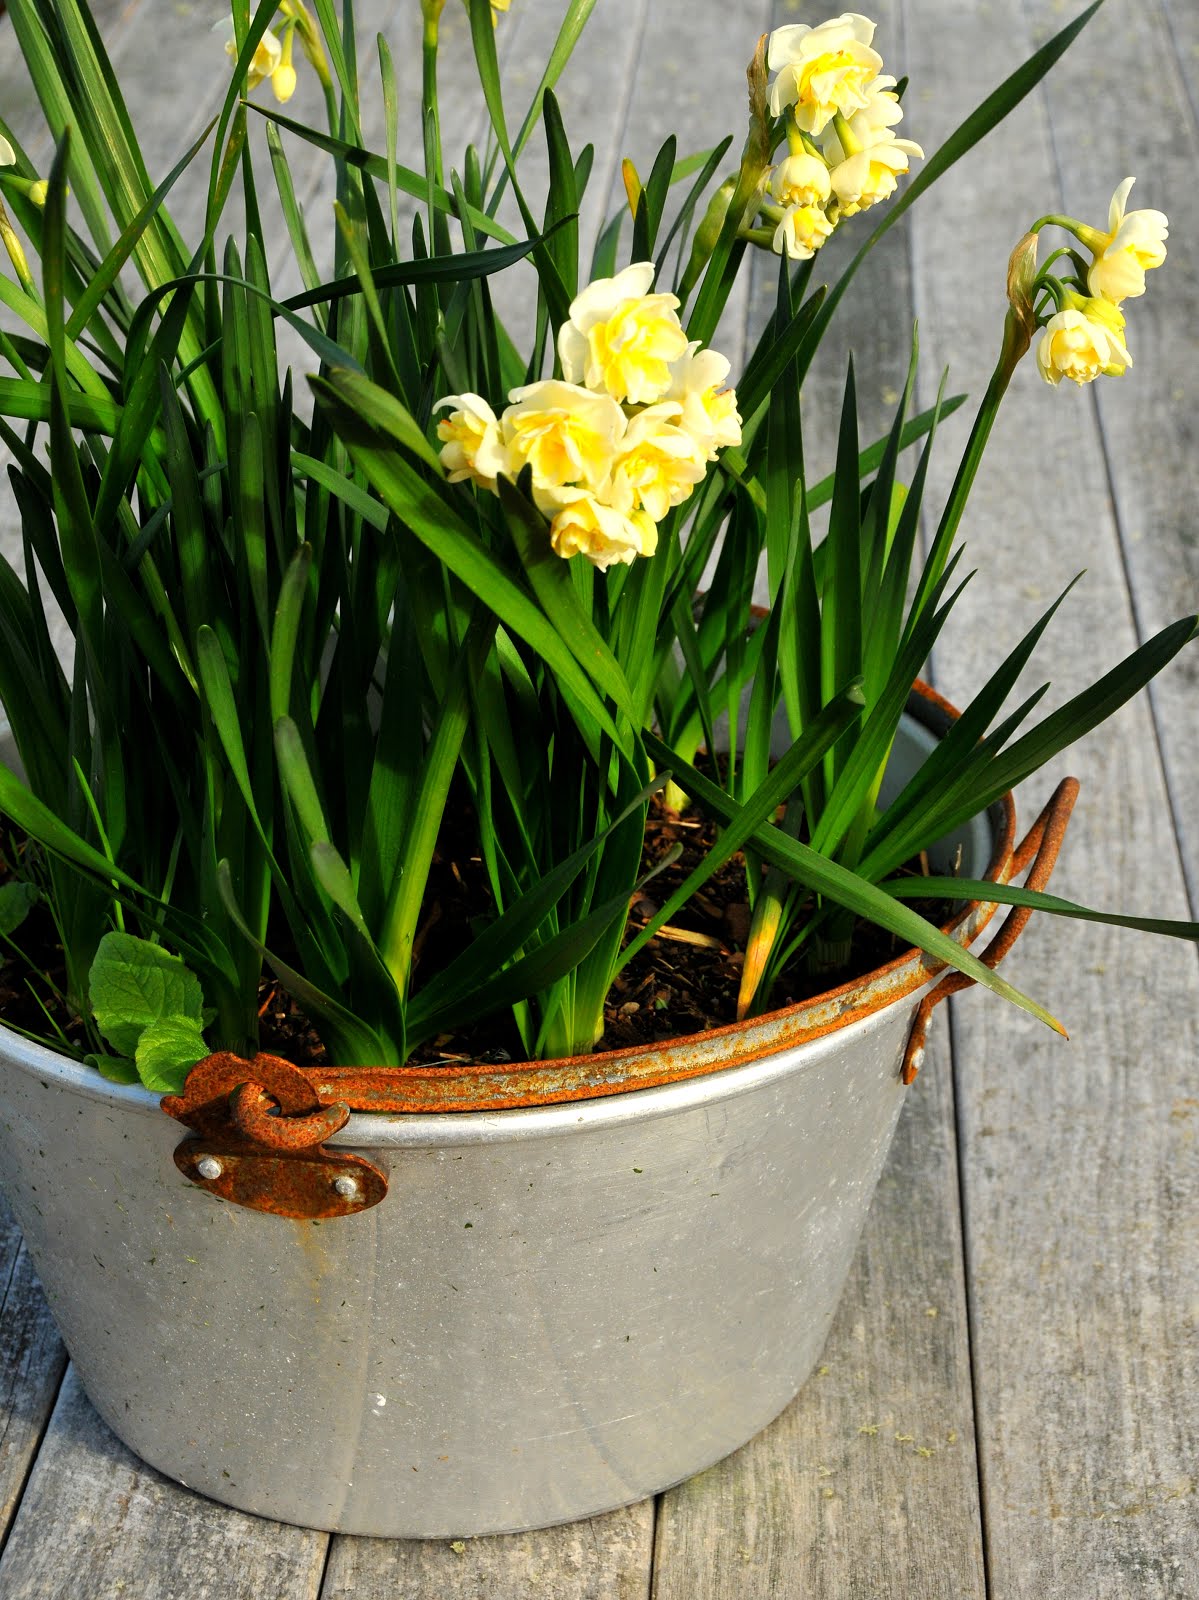 Daffodils in Gramma's old jam making pot